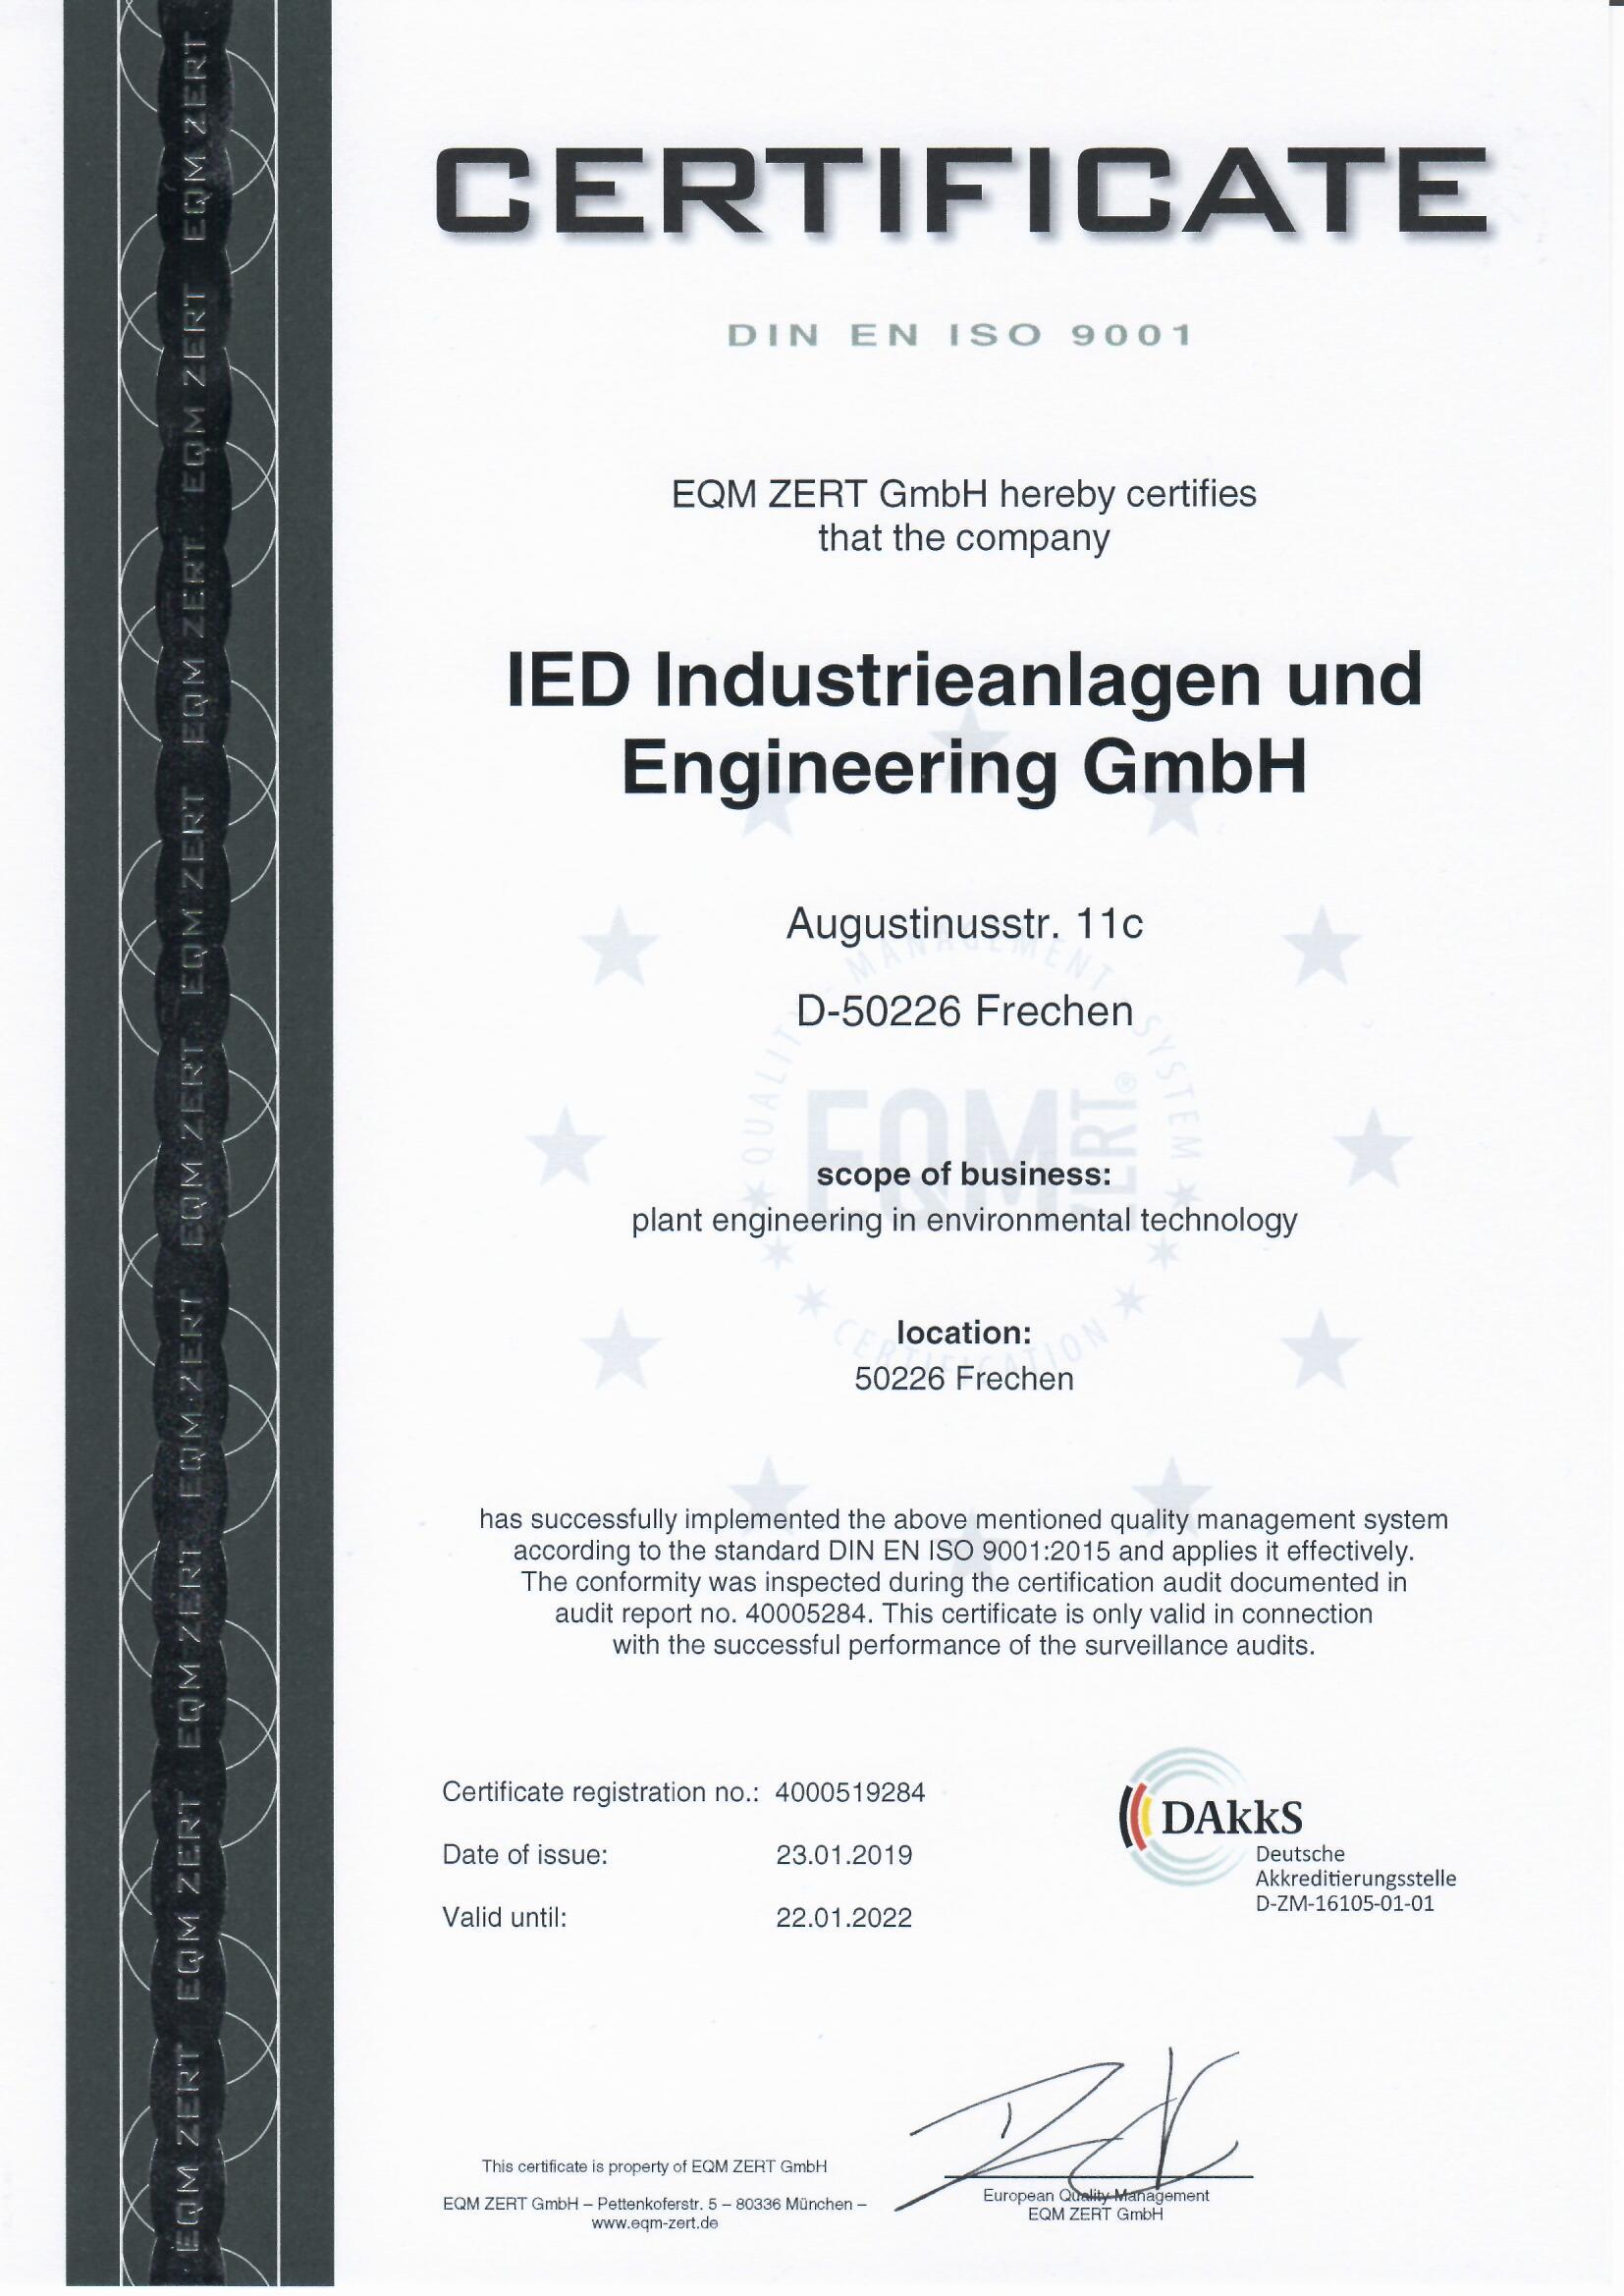 Certificate EN 180 9001